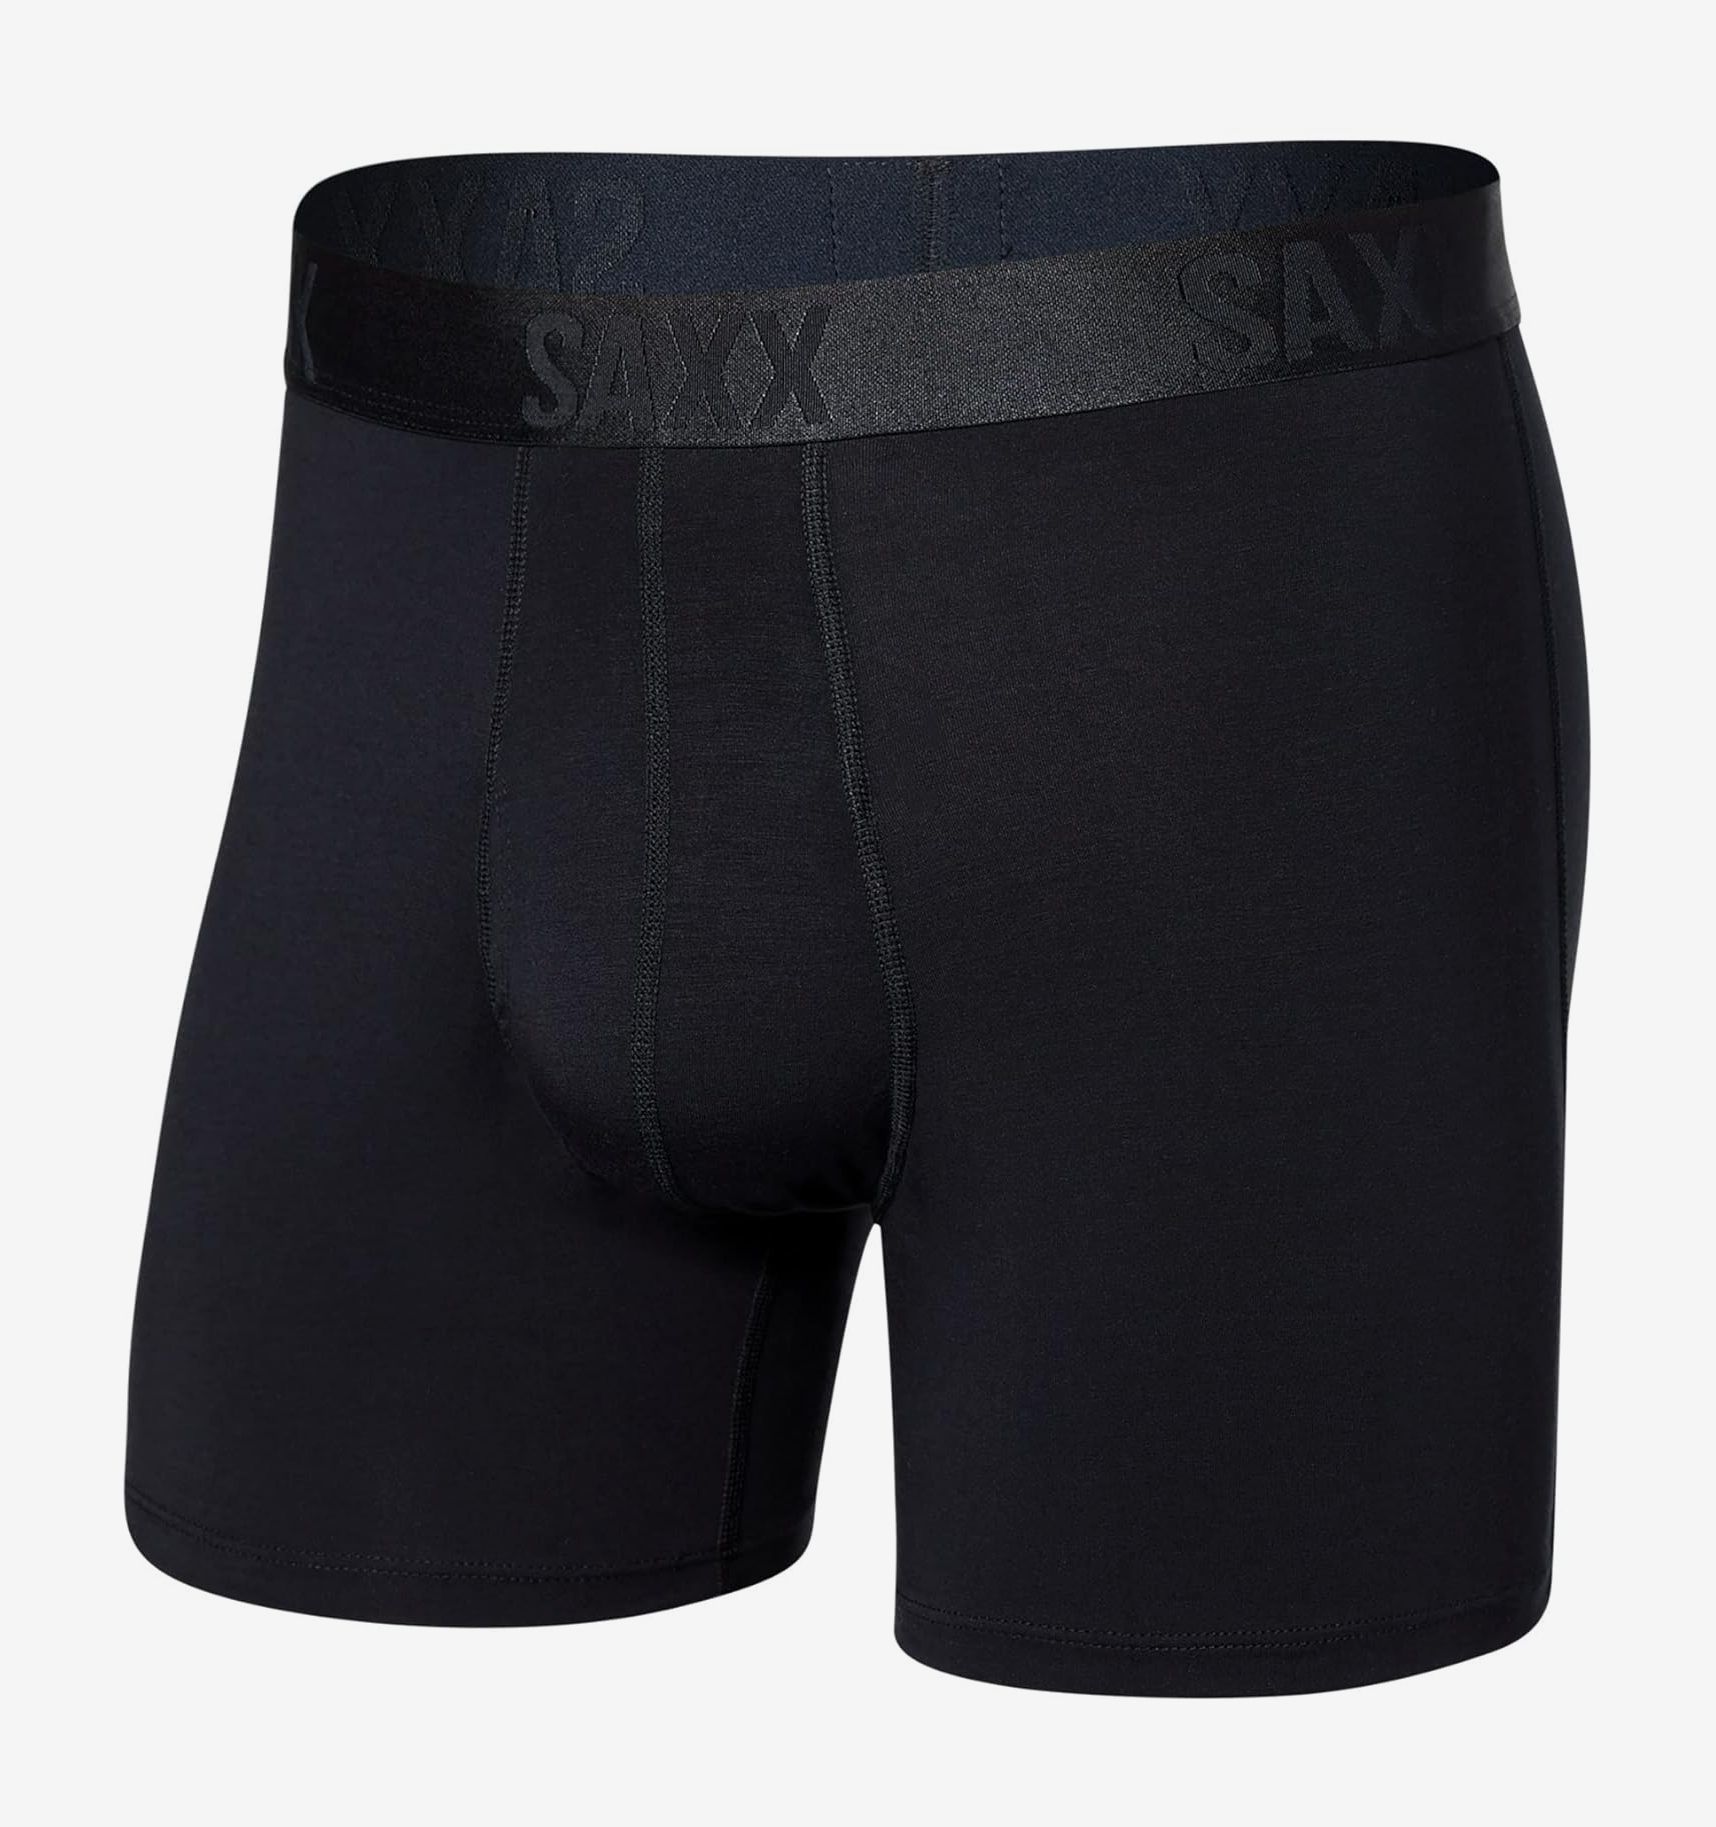 Hanes Originals Ultimate Men's SuperSoft Trunk Underwear, Black, 3-Pack